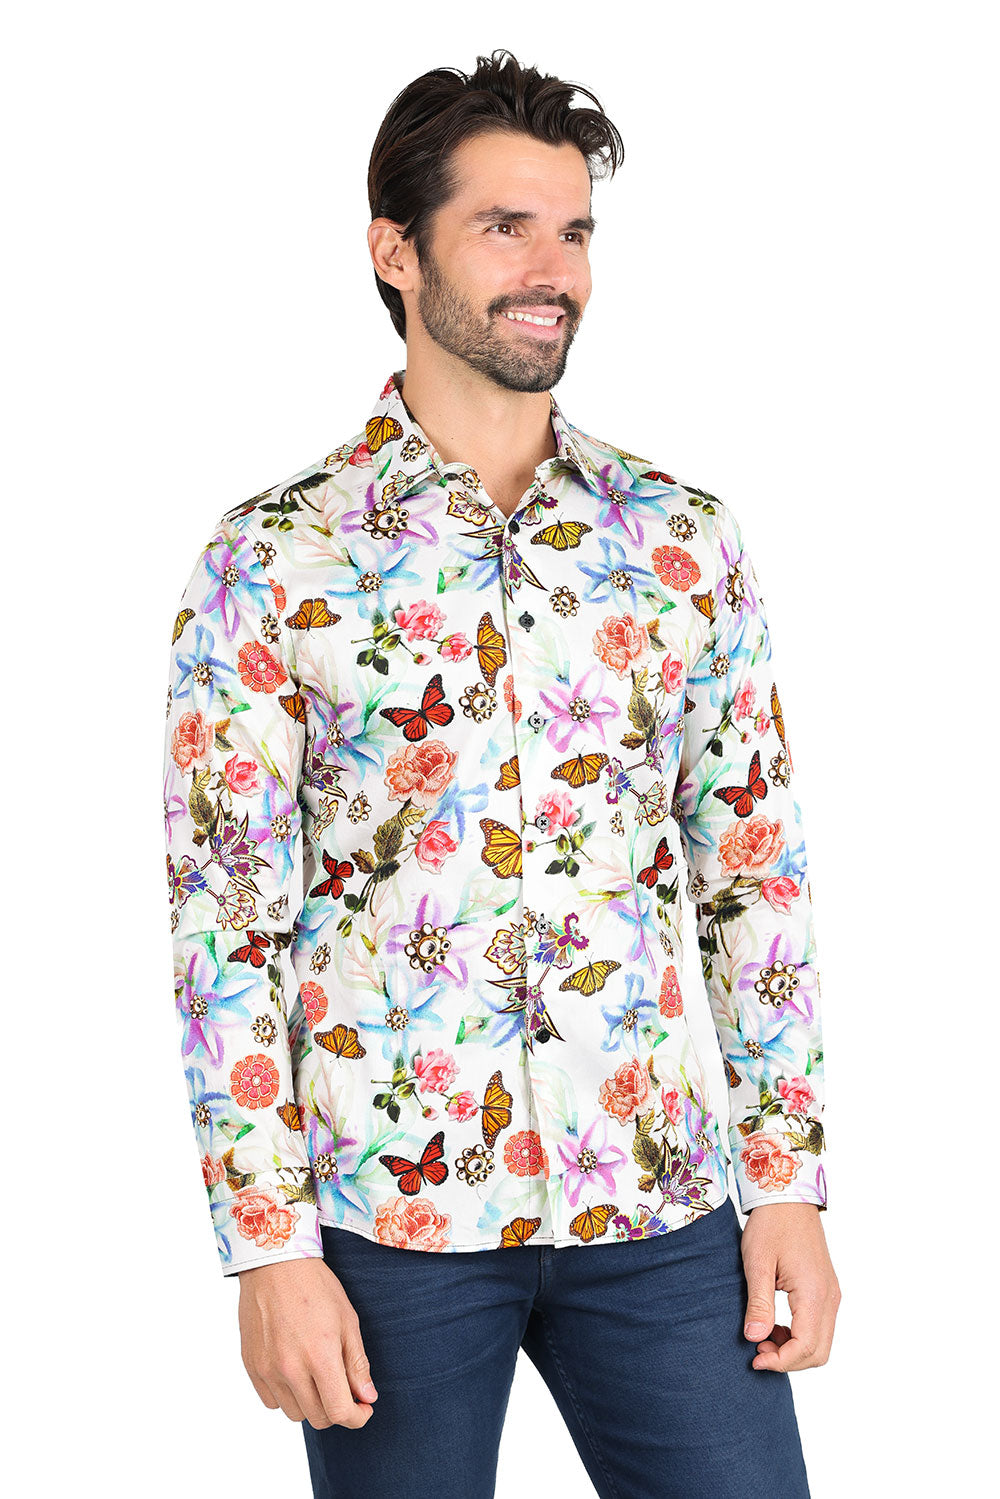 Barabas Long Sleeve Butterfly Print Men's Button Down Dress Shirts 2SA03 Multicolor